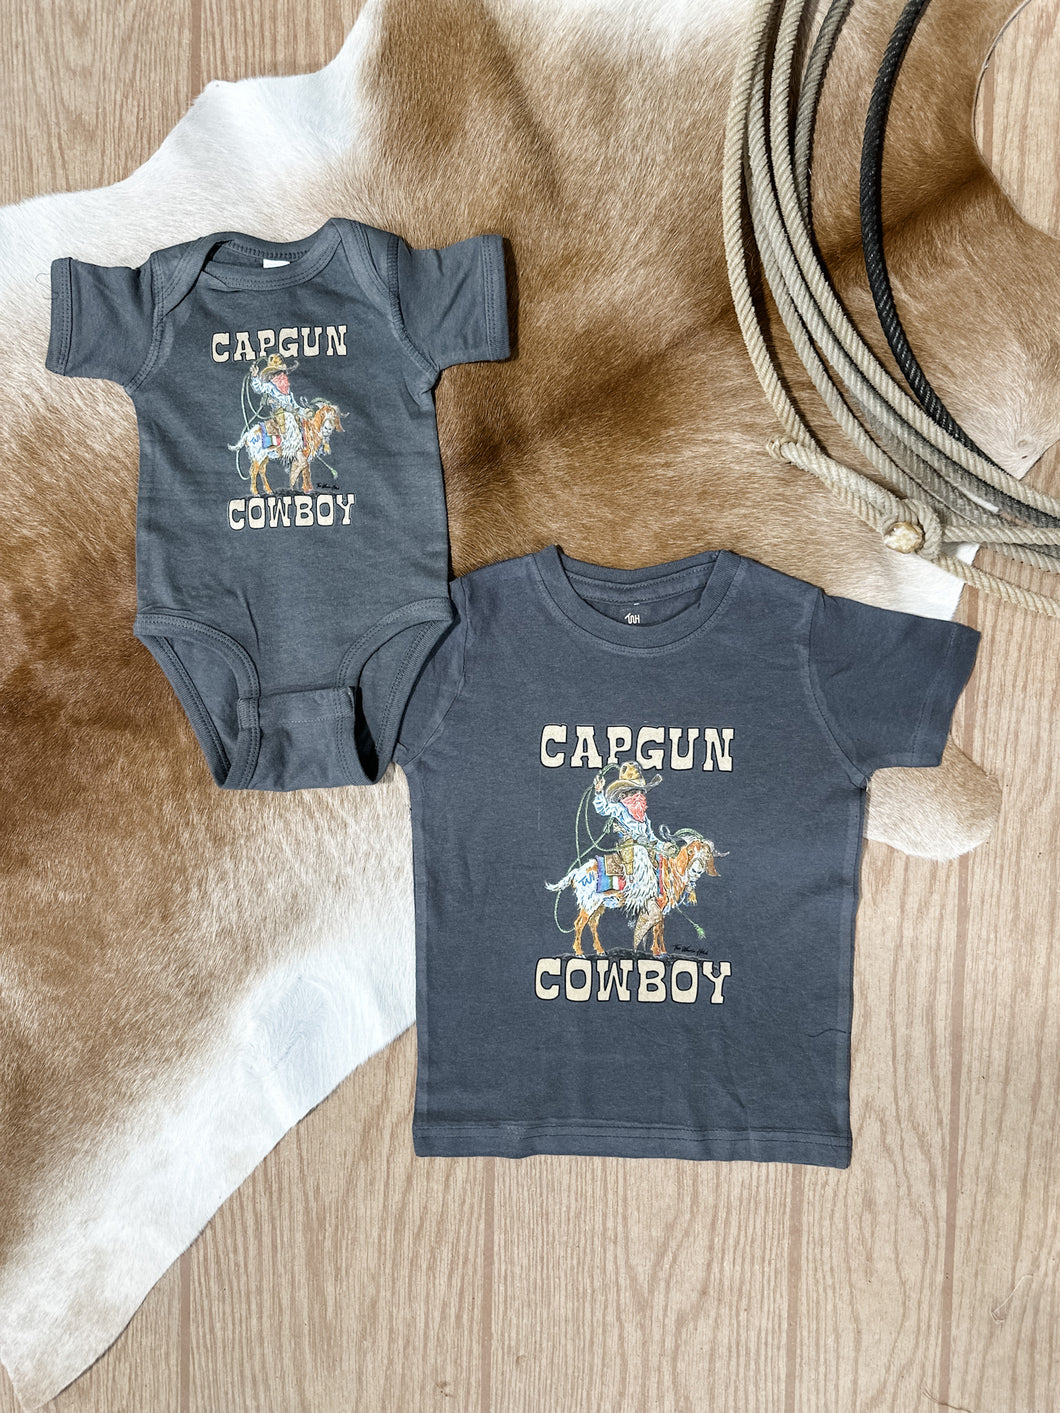 Cap Gun Cowboy Graphic Tee